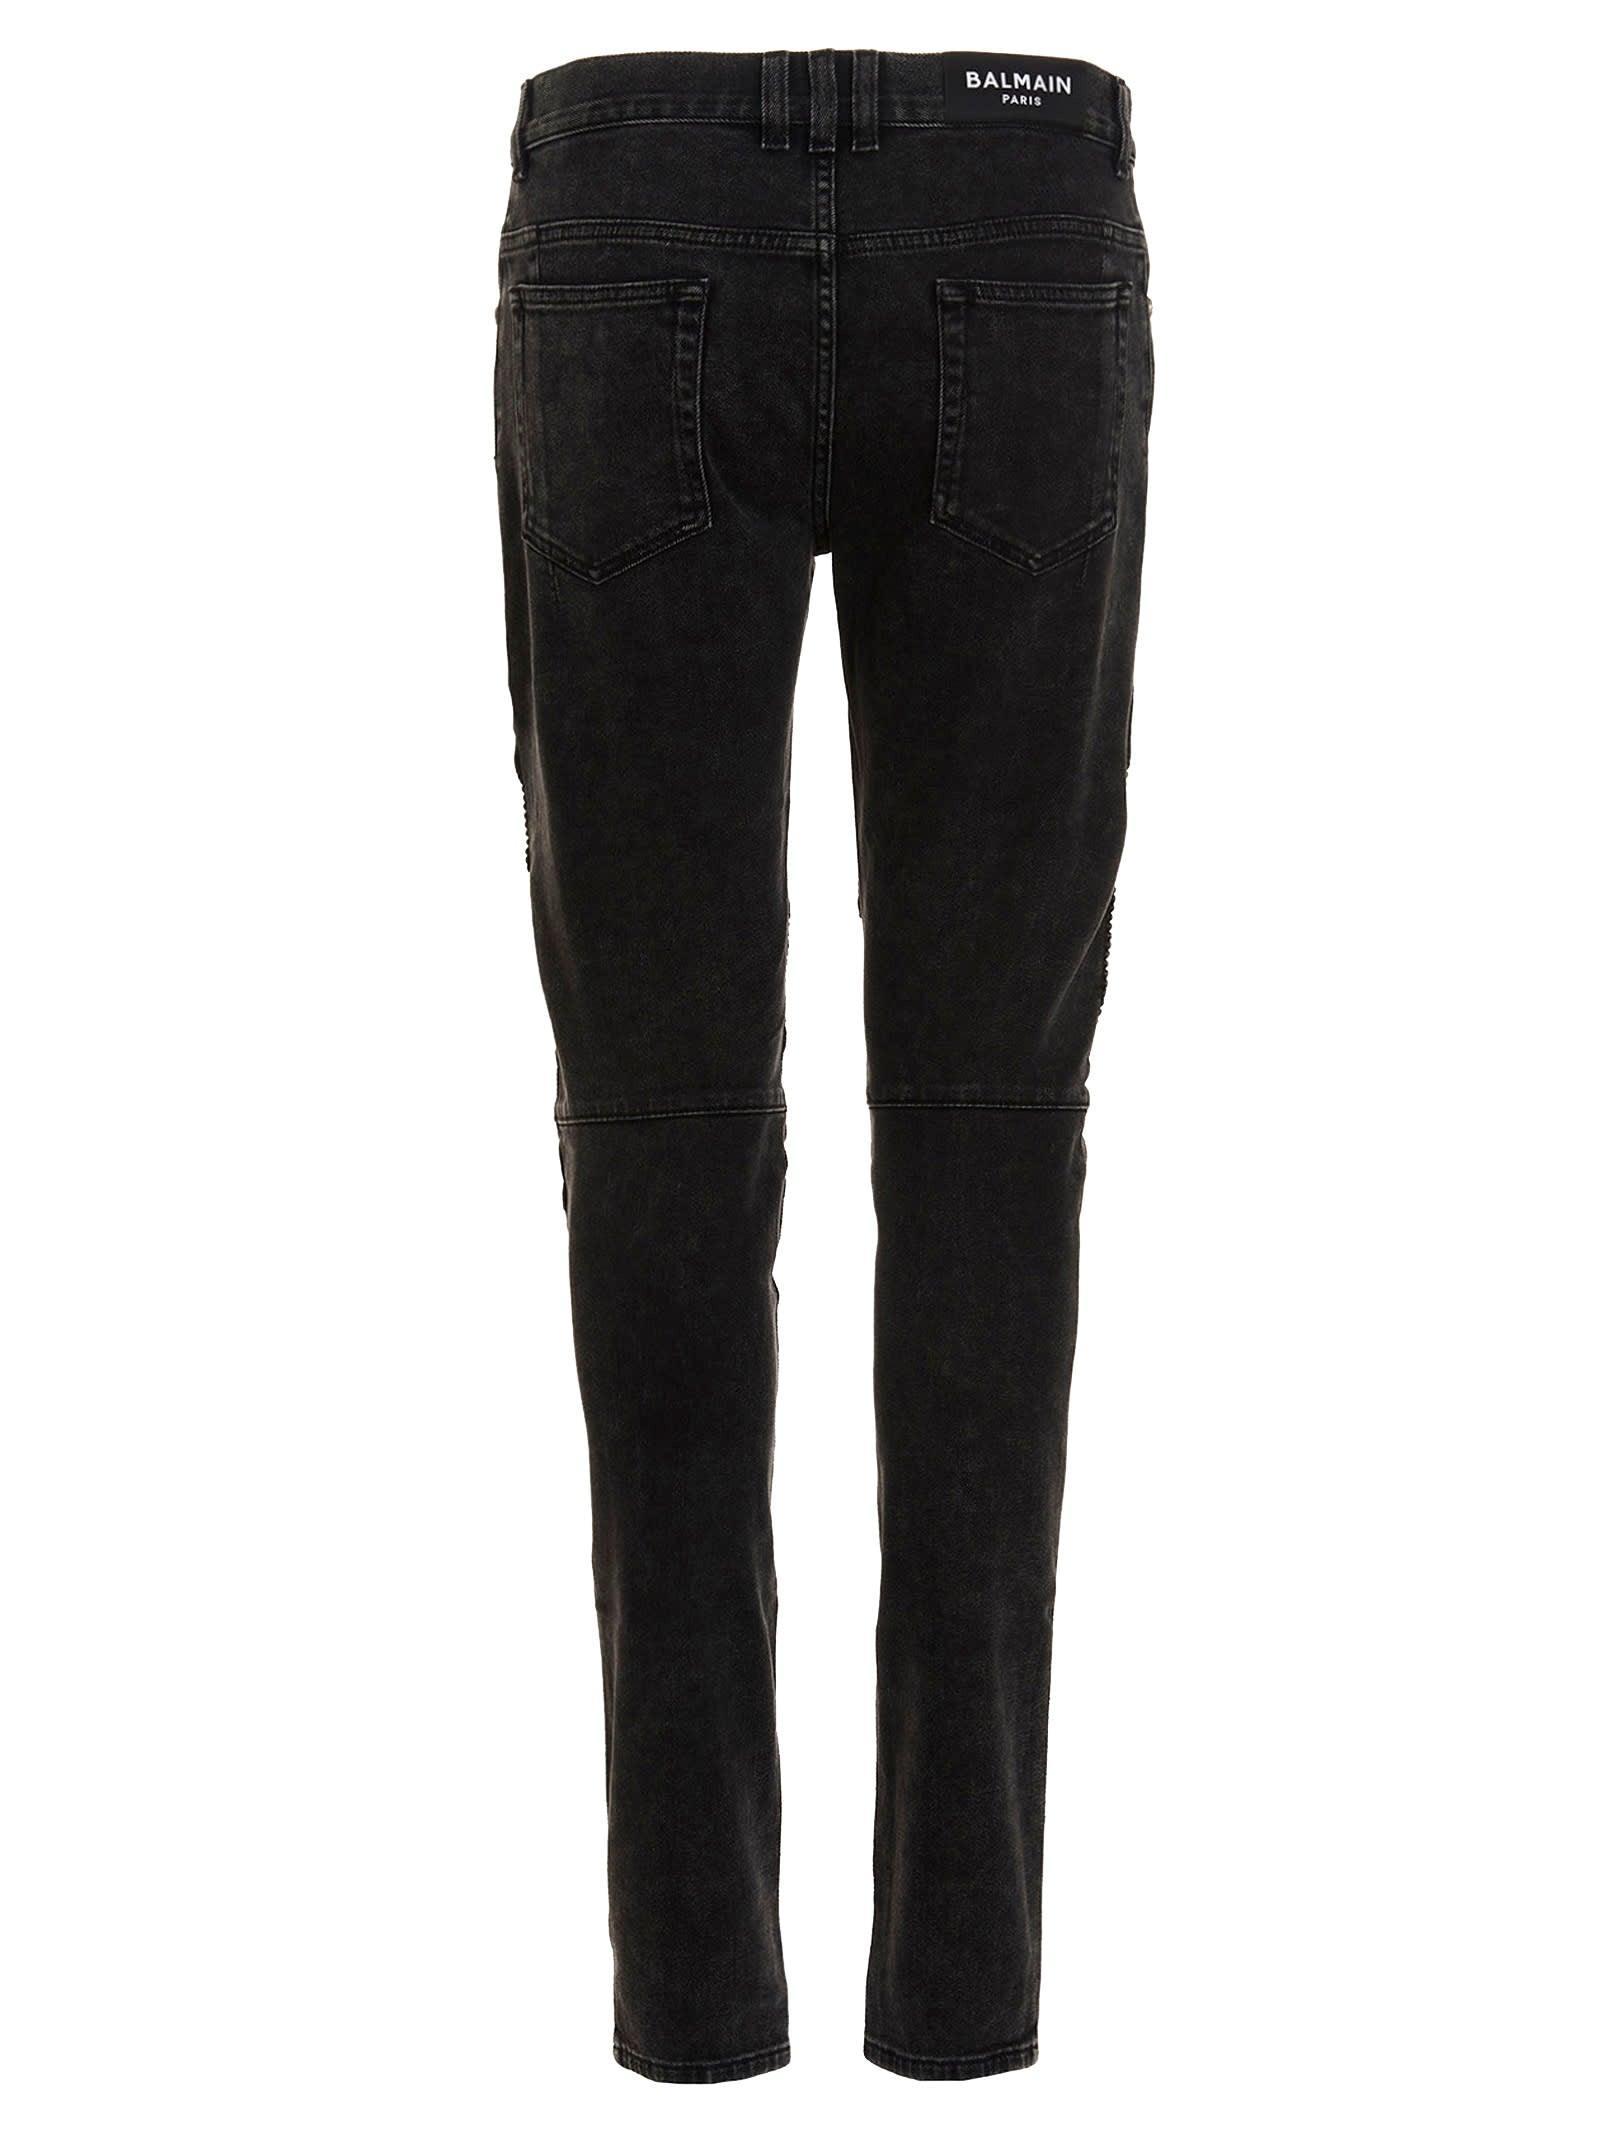 Balmain Zip Detail Jeans in Black Men | Lyst